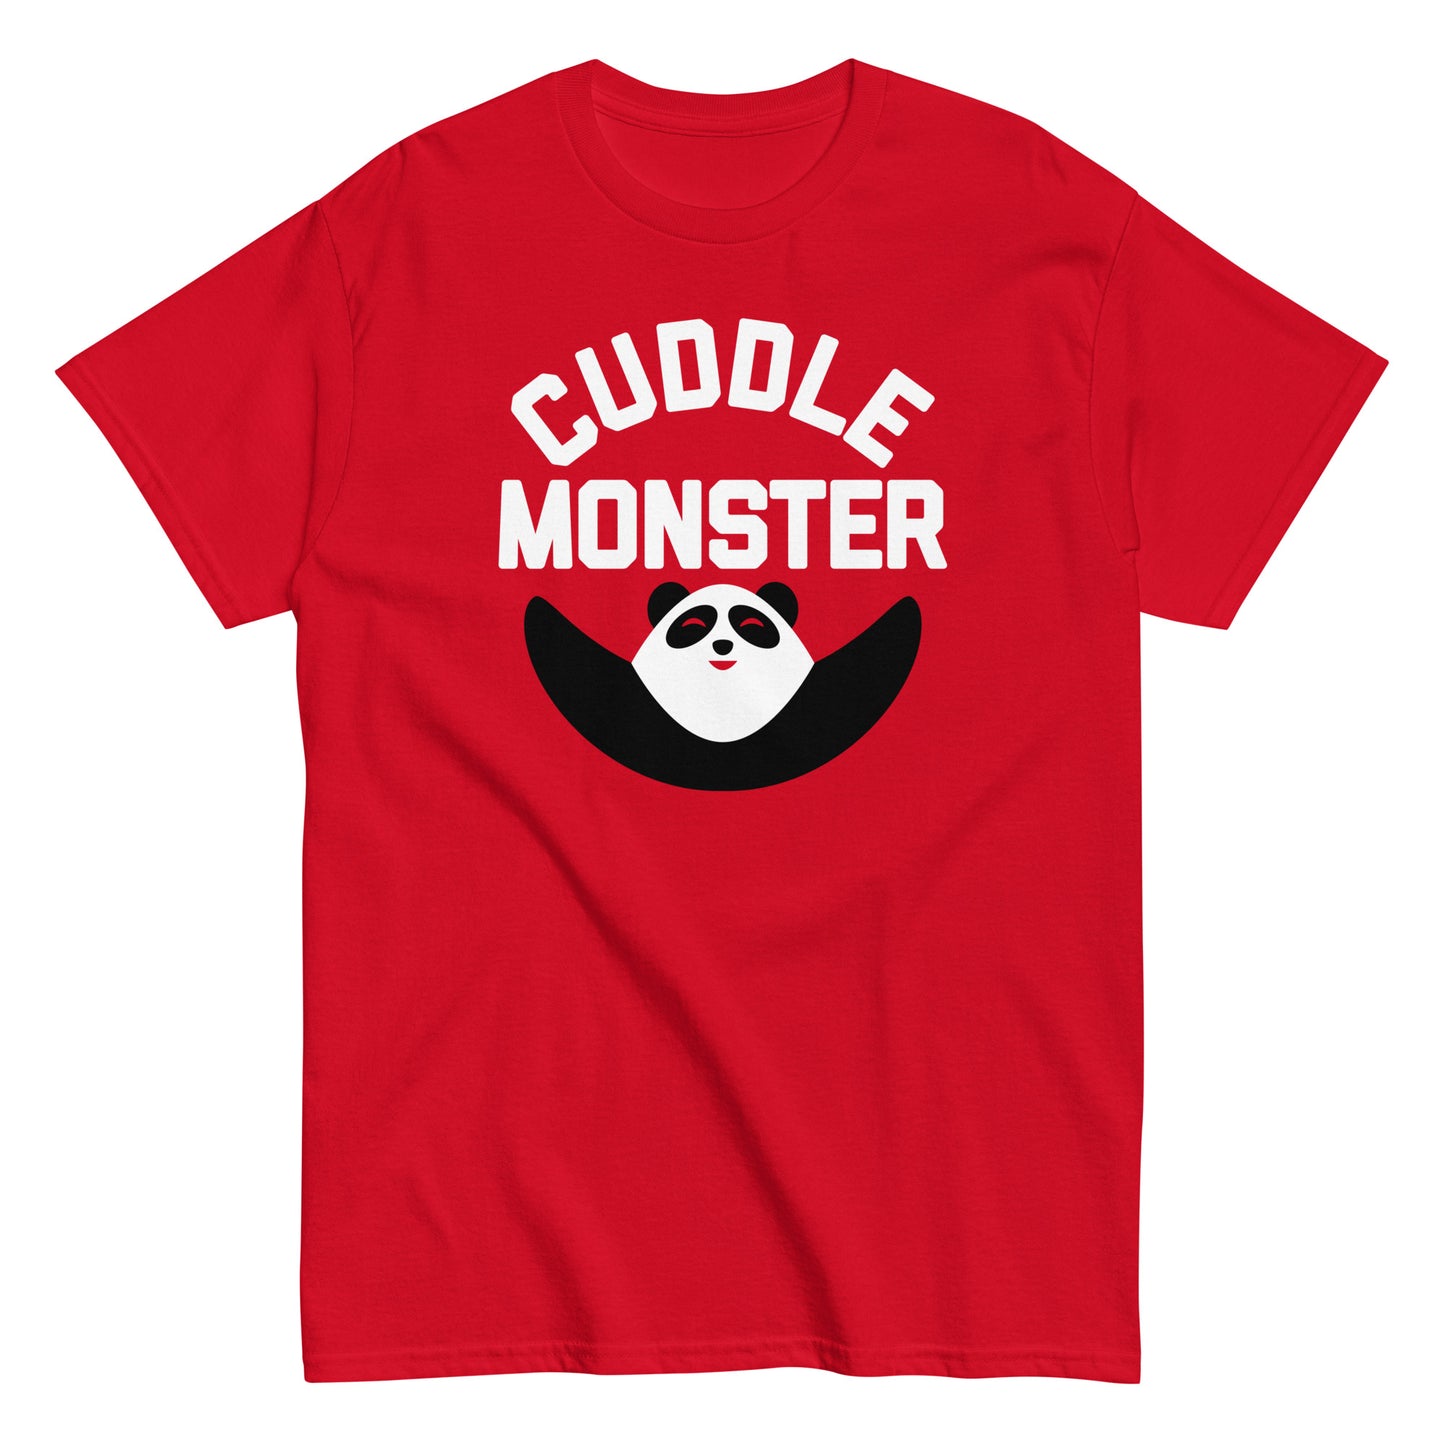 Cuddle Monster Men's Classic Tee